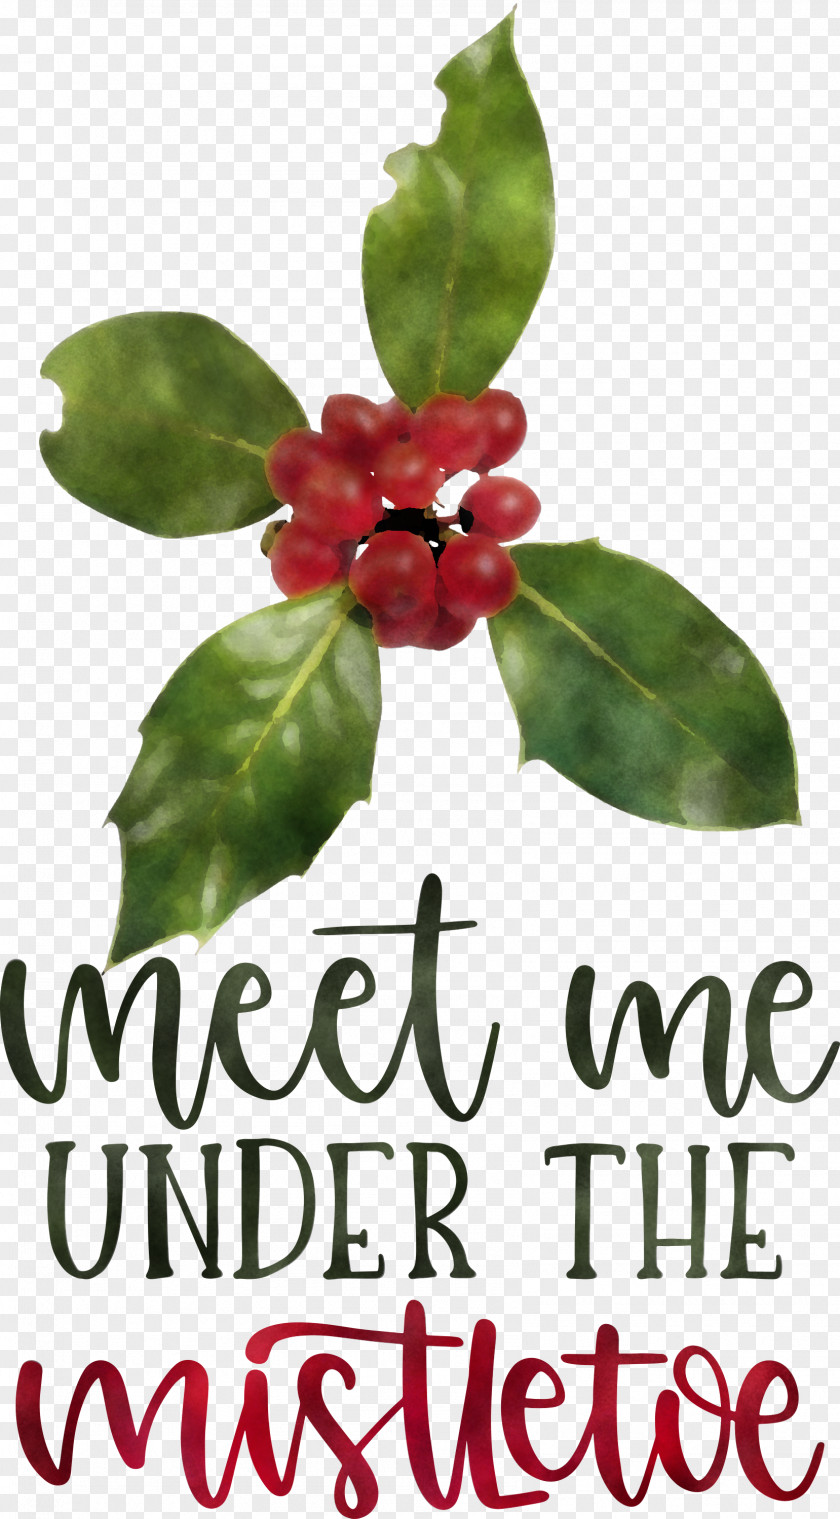 Meet Me Under The Mistletoe PNG